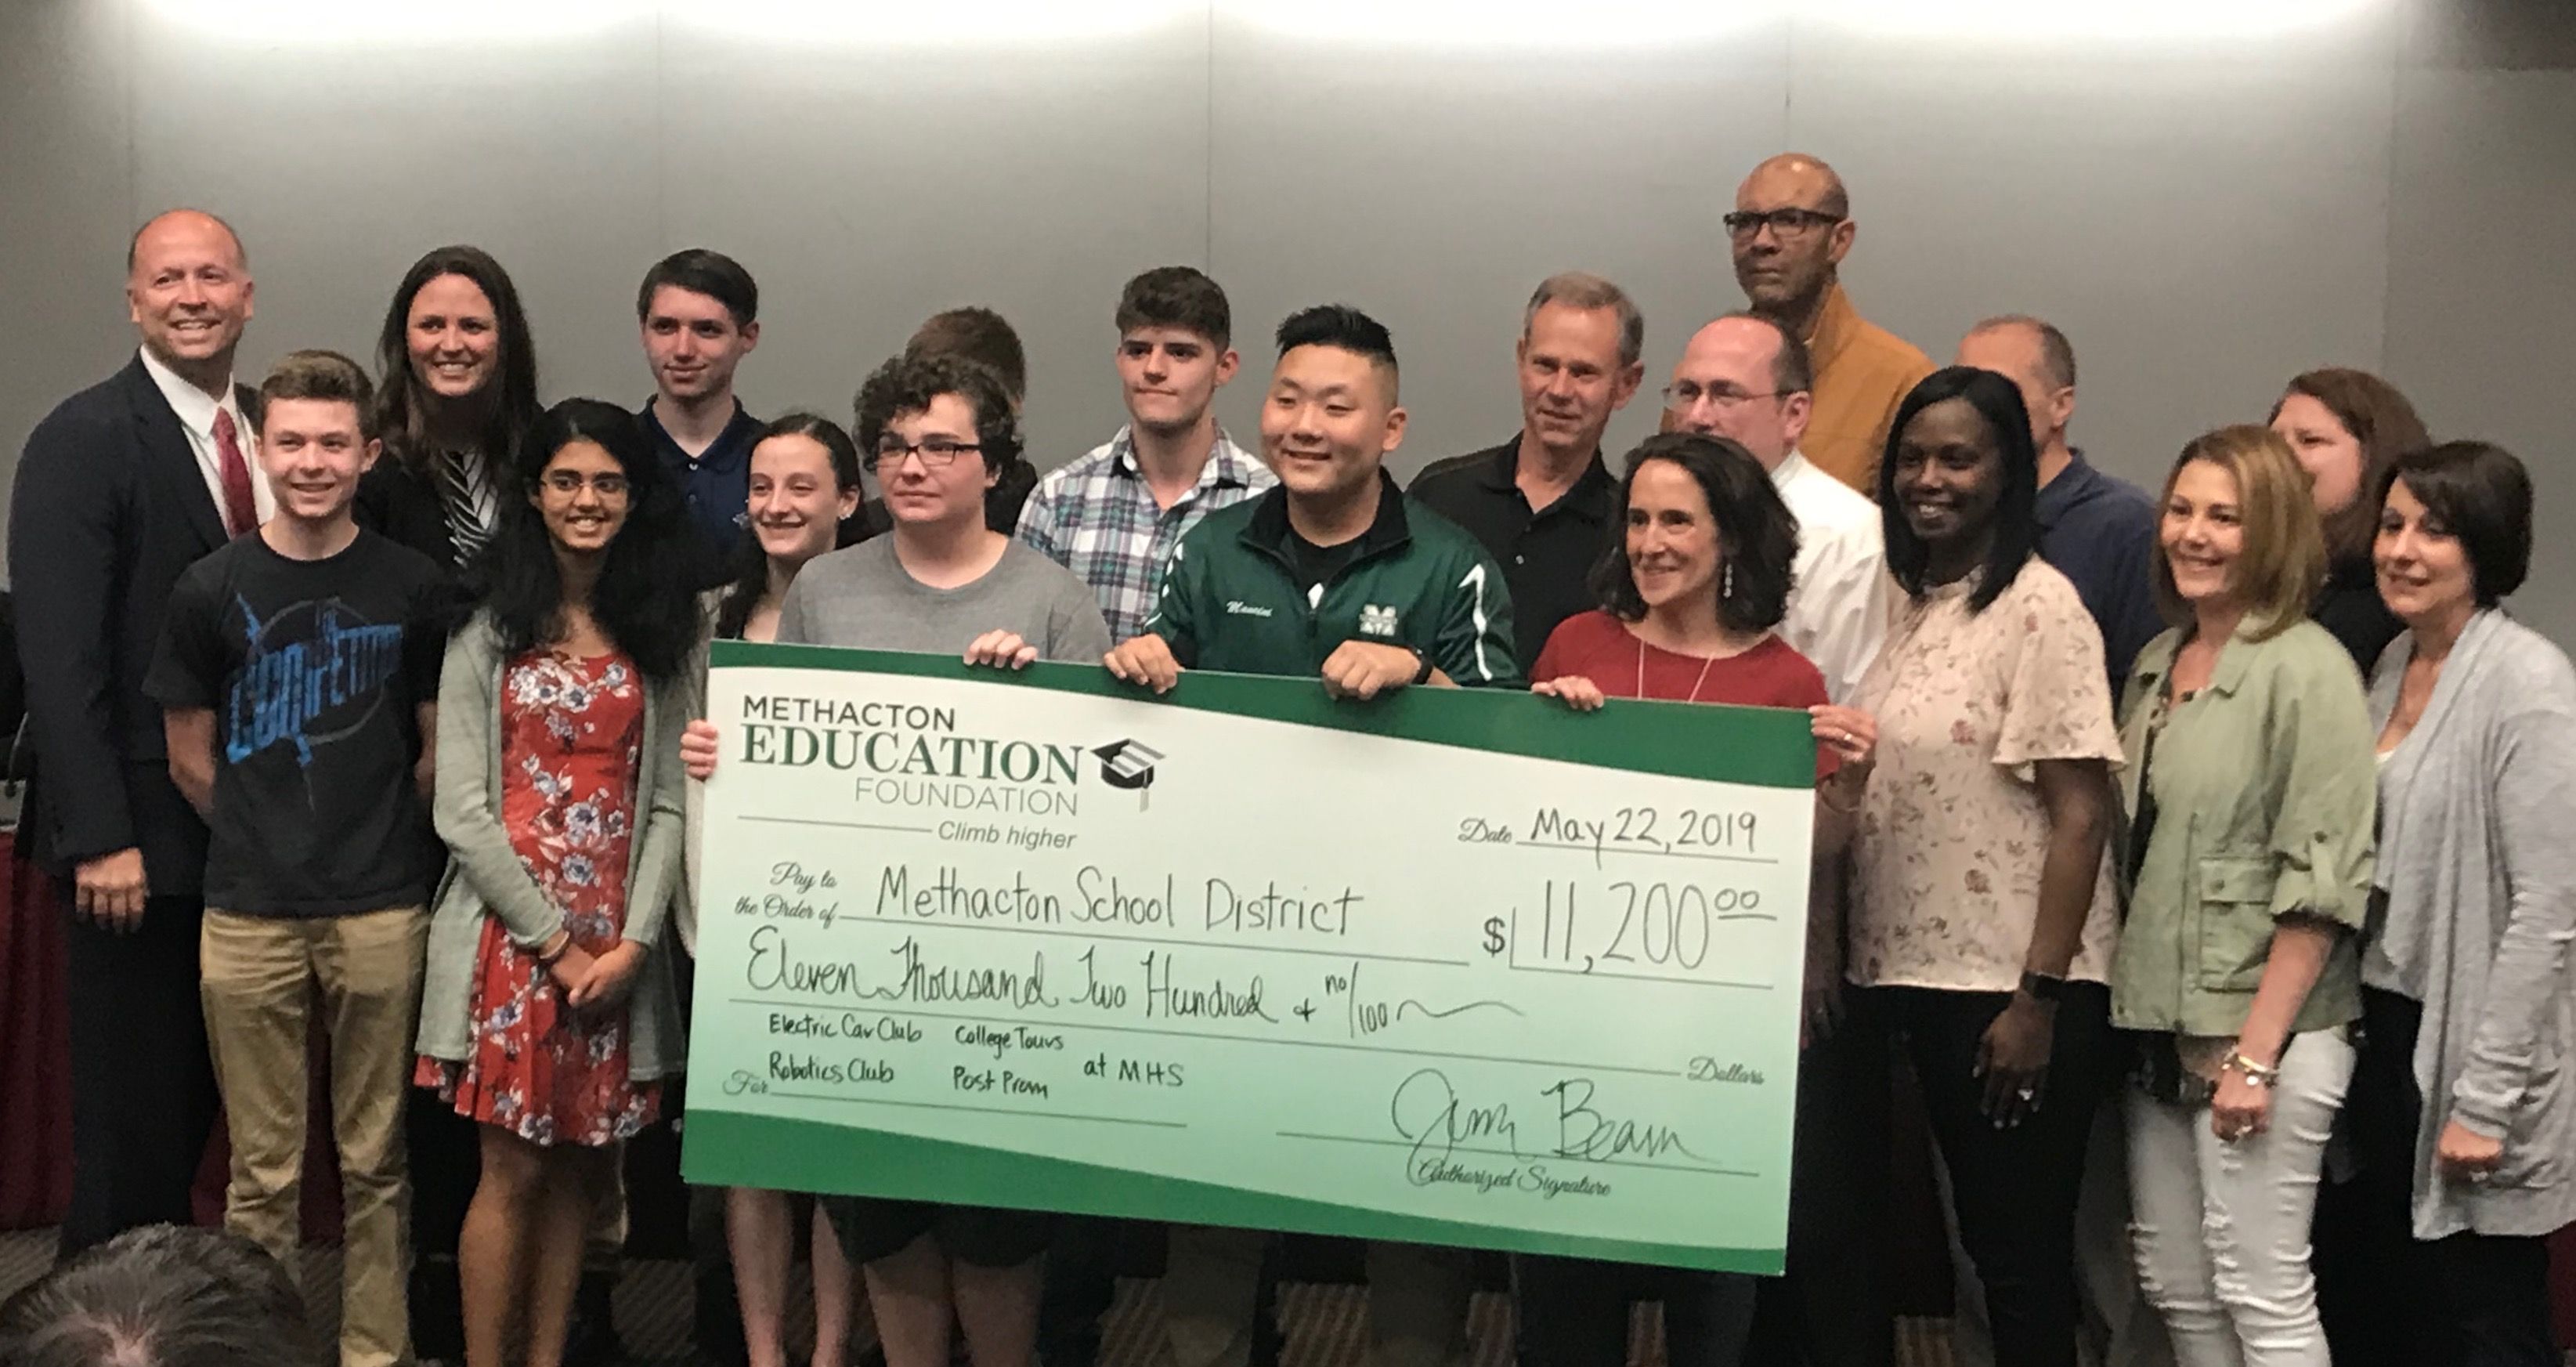 Foundation Awards $11,200 for High School Grants